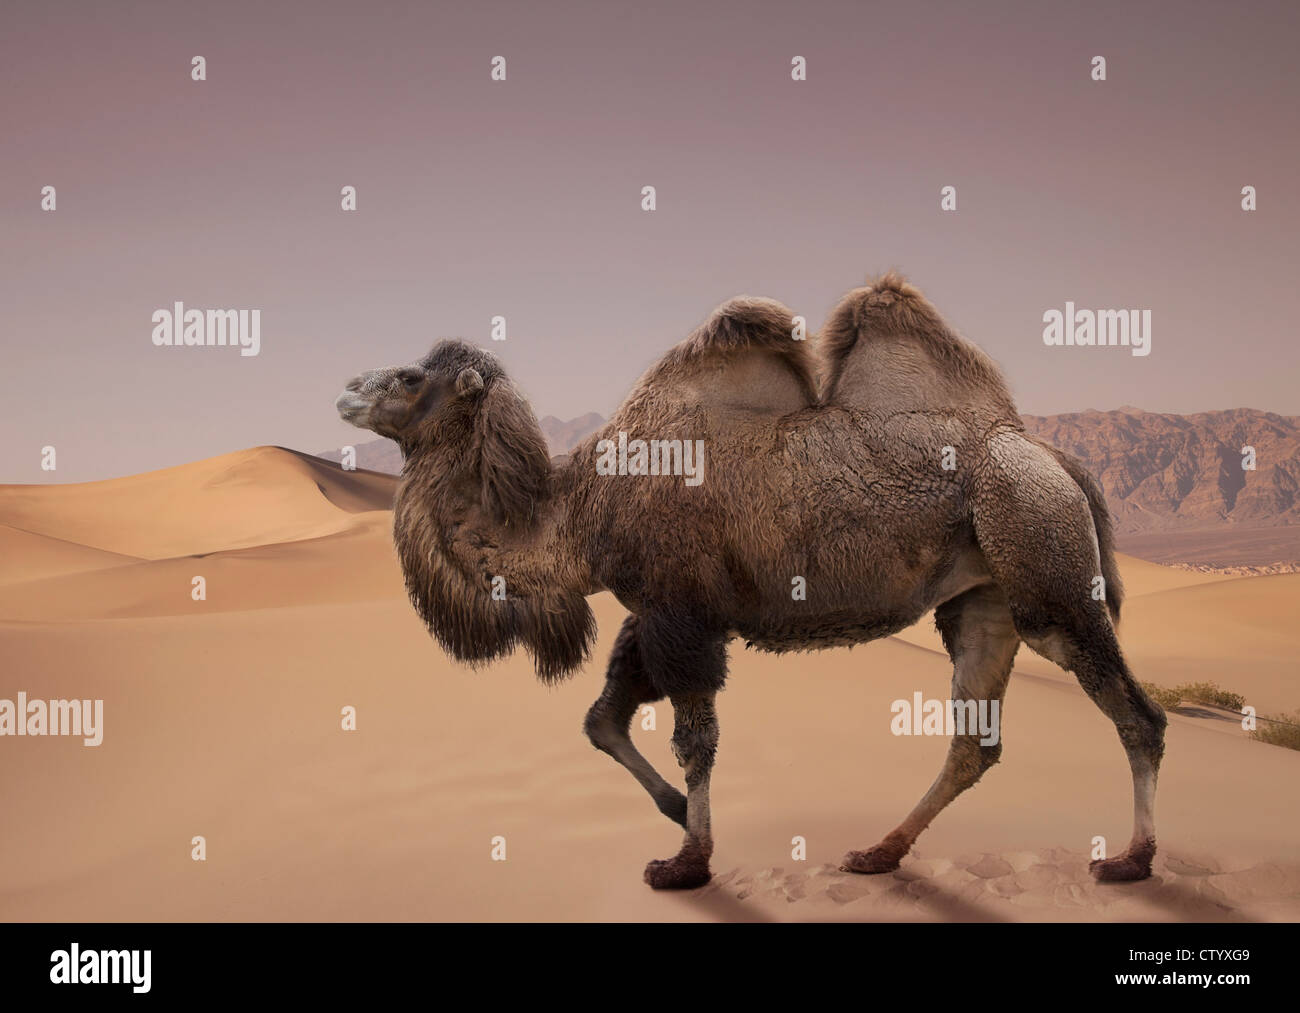 Bactrian camel camminando nel deserto Foto Stock